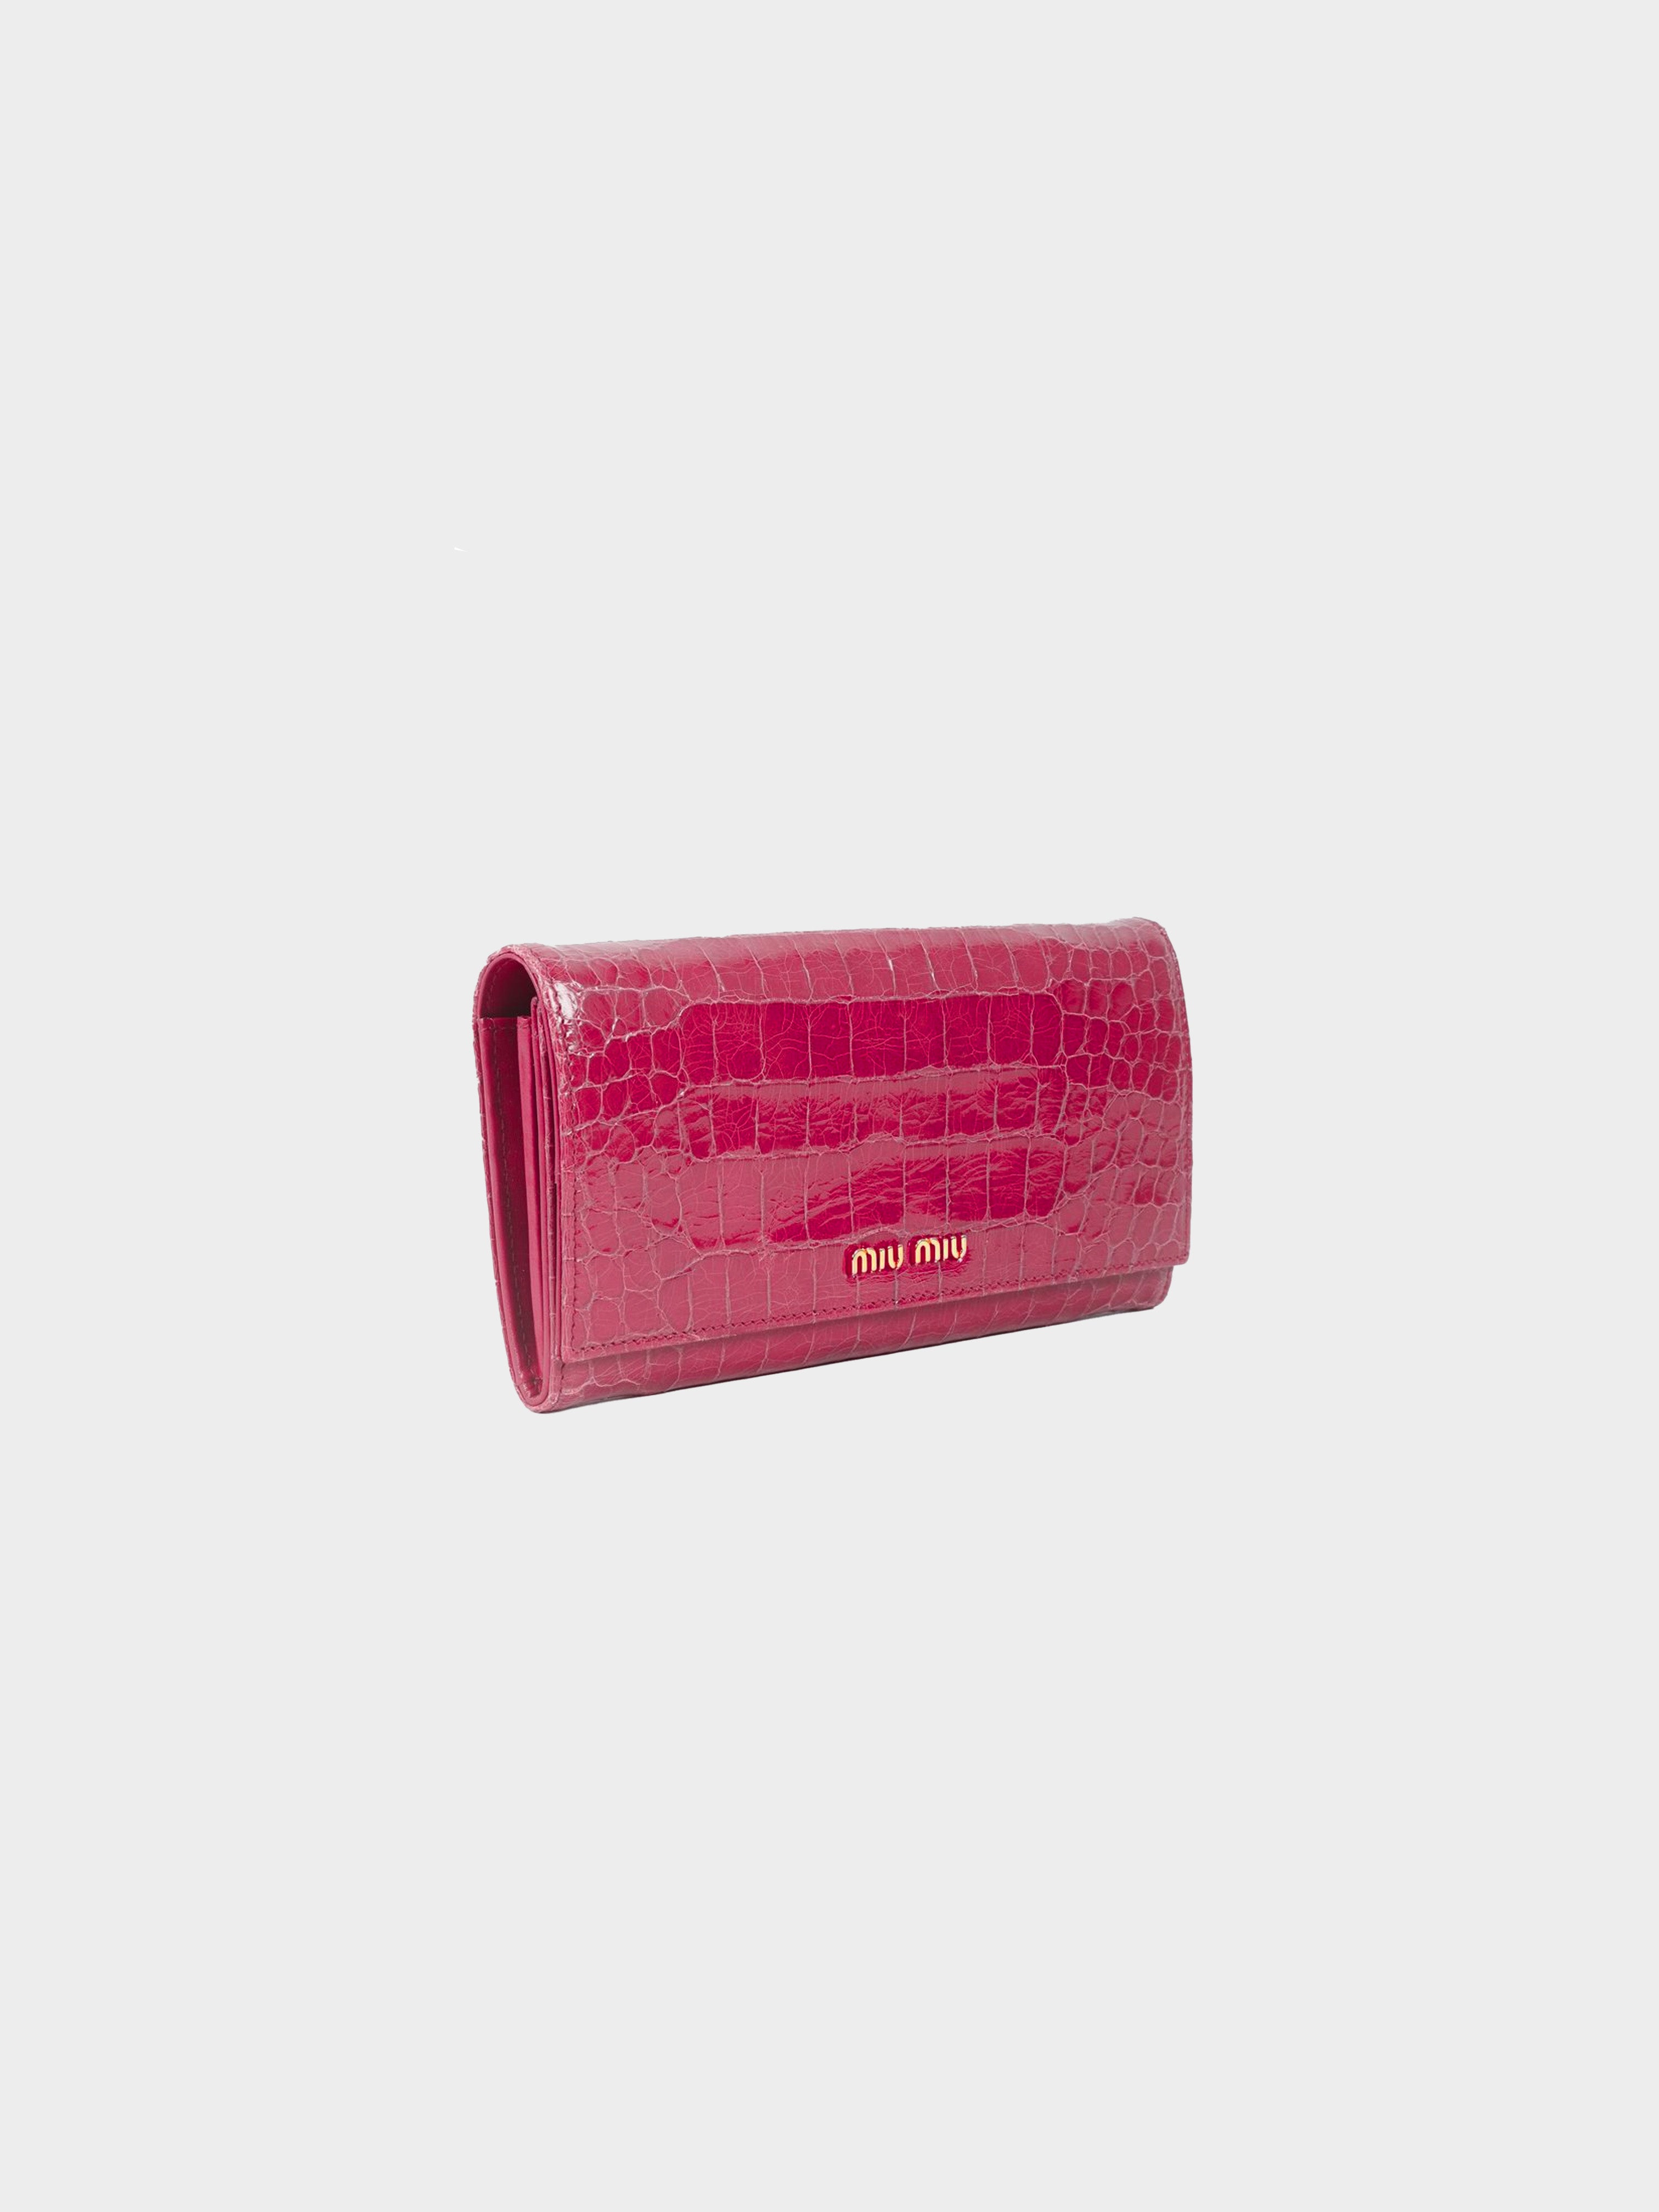 Miu Miu 2010s Pink Glossy Croc Wallet